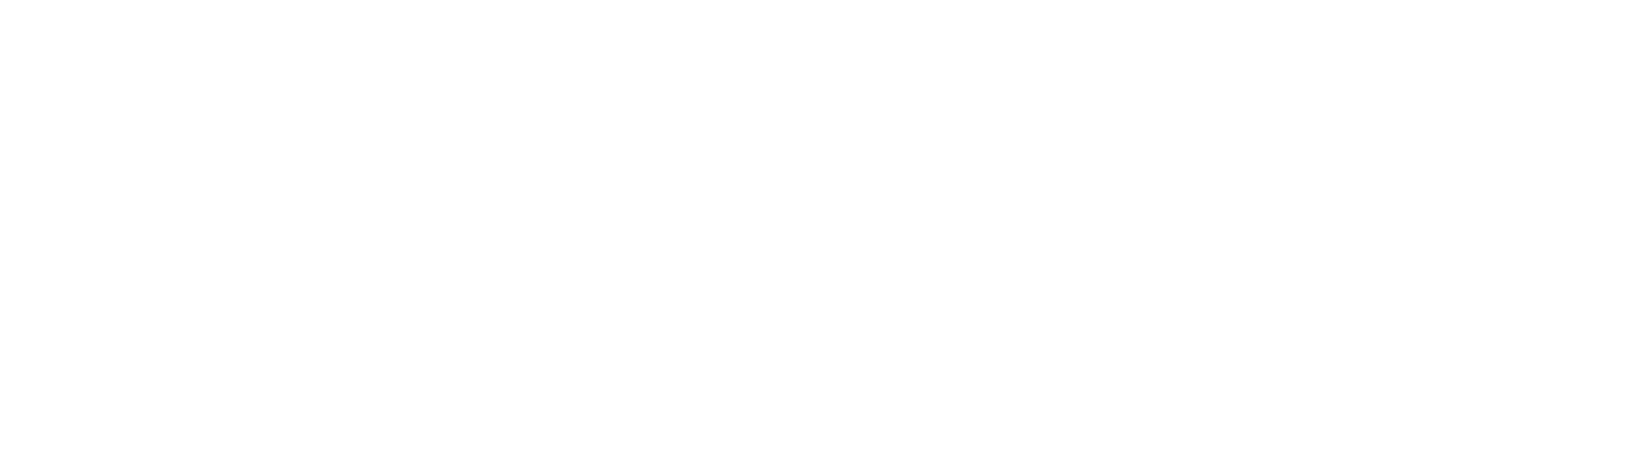 Web Design Wirral